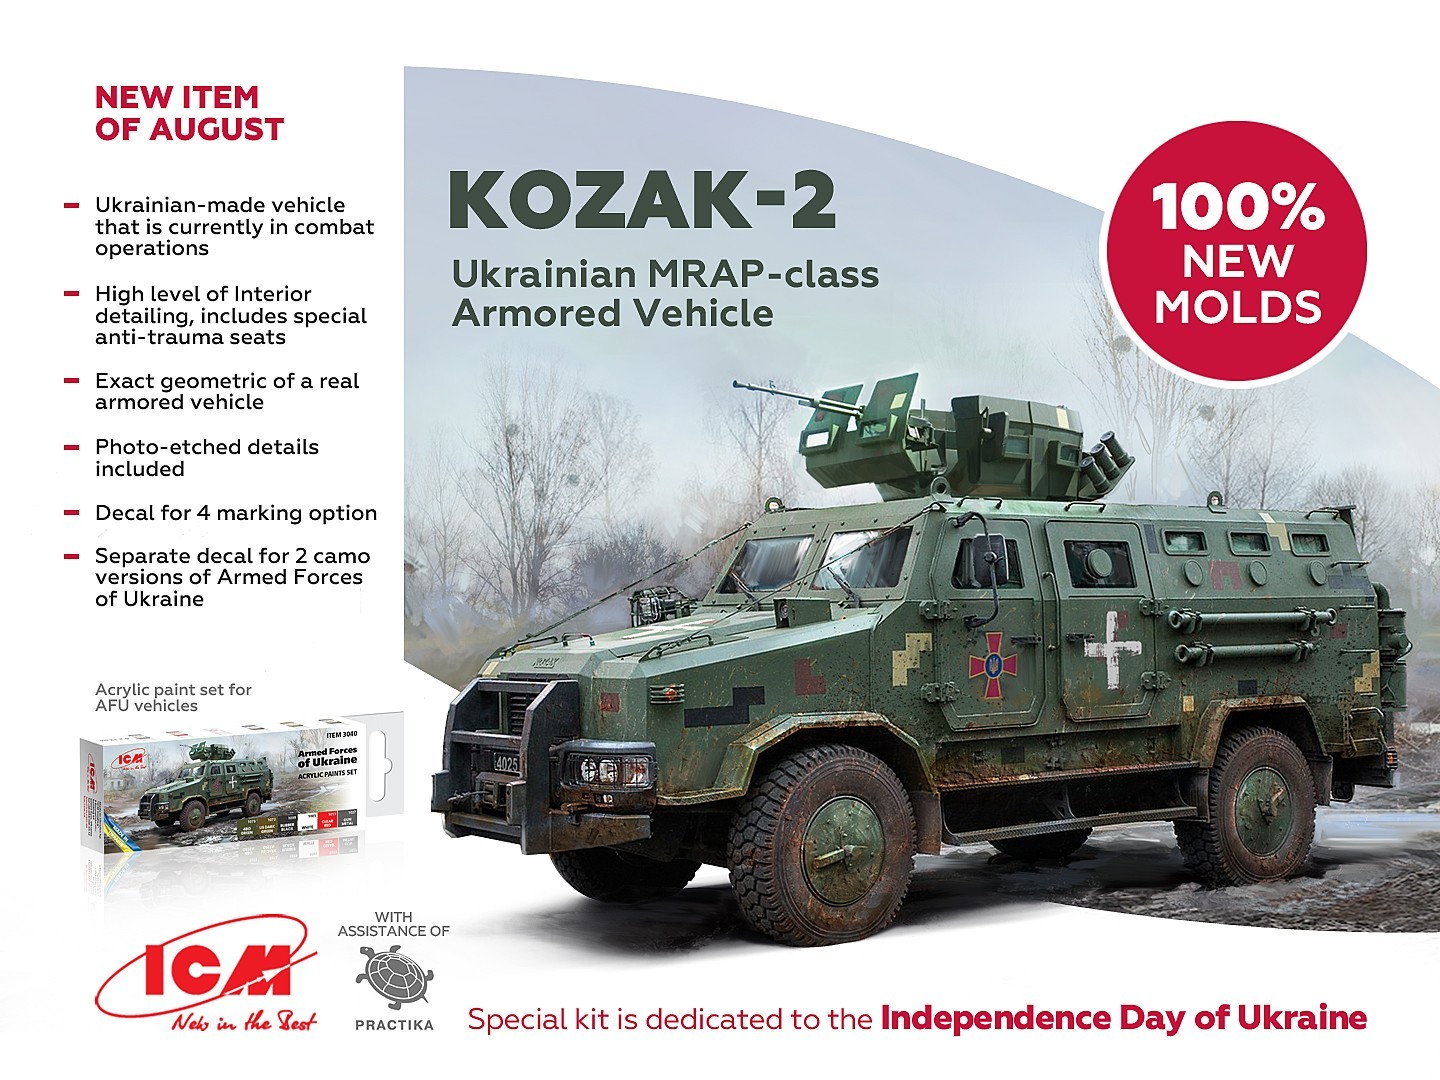 ‘Kozak-2’ Ukrainian MRAP-class Armored Vehicle